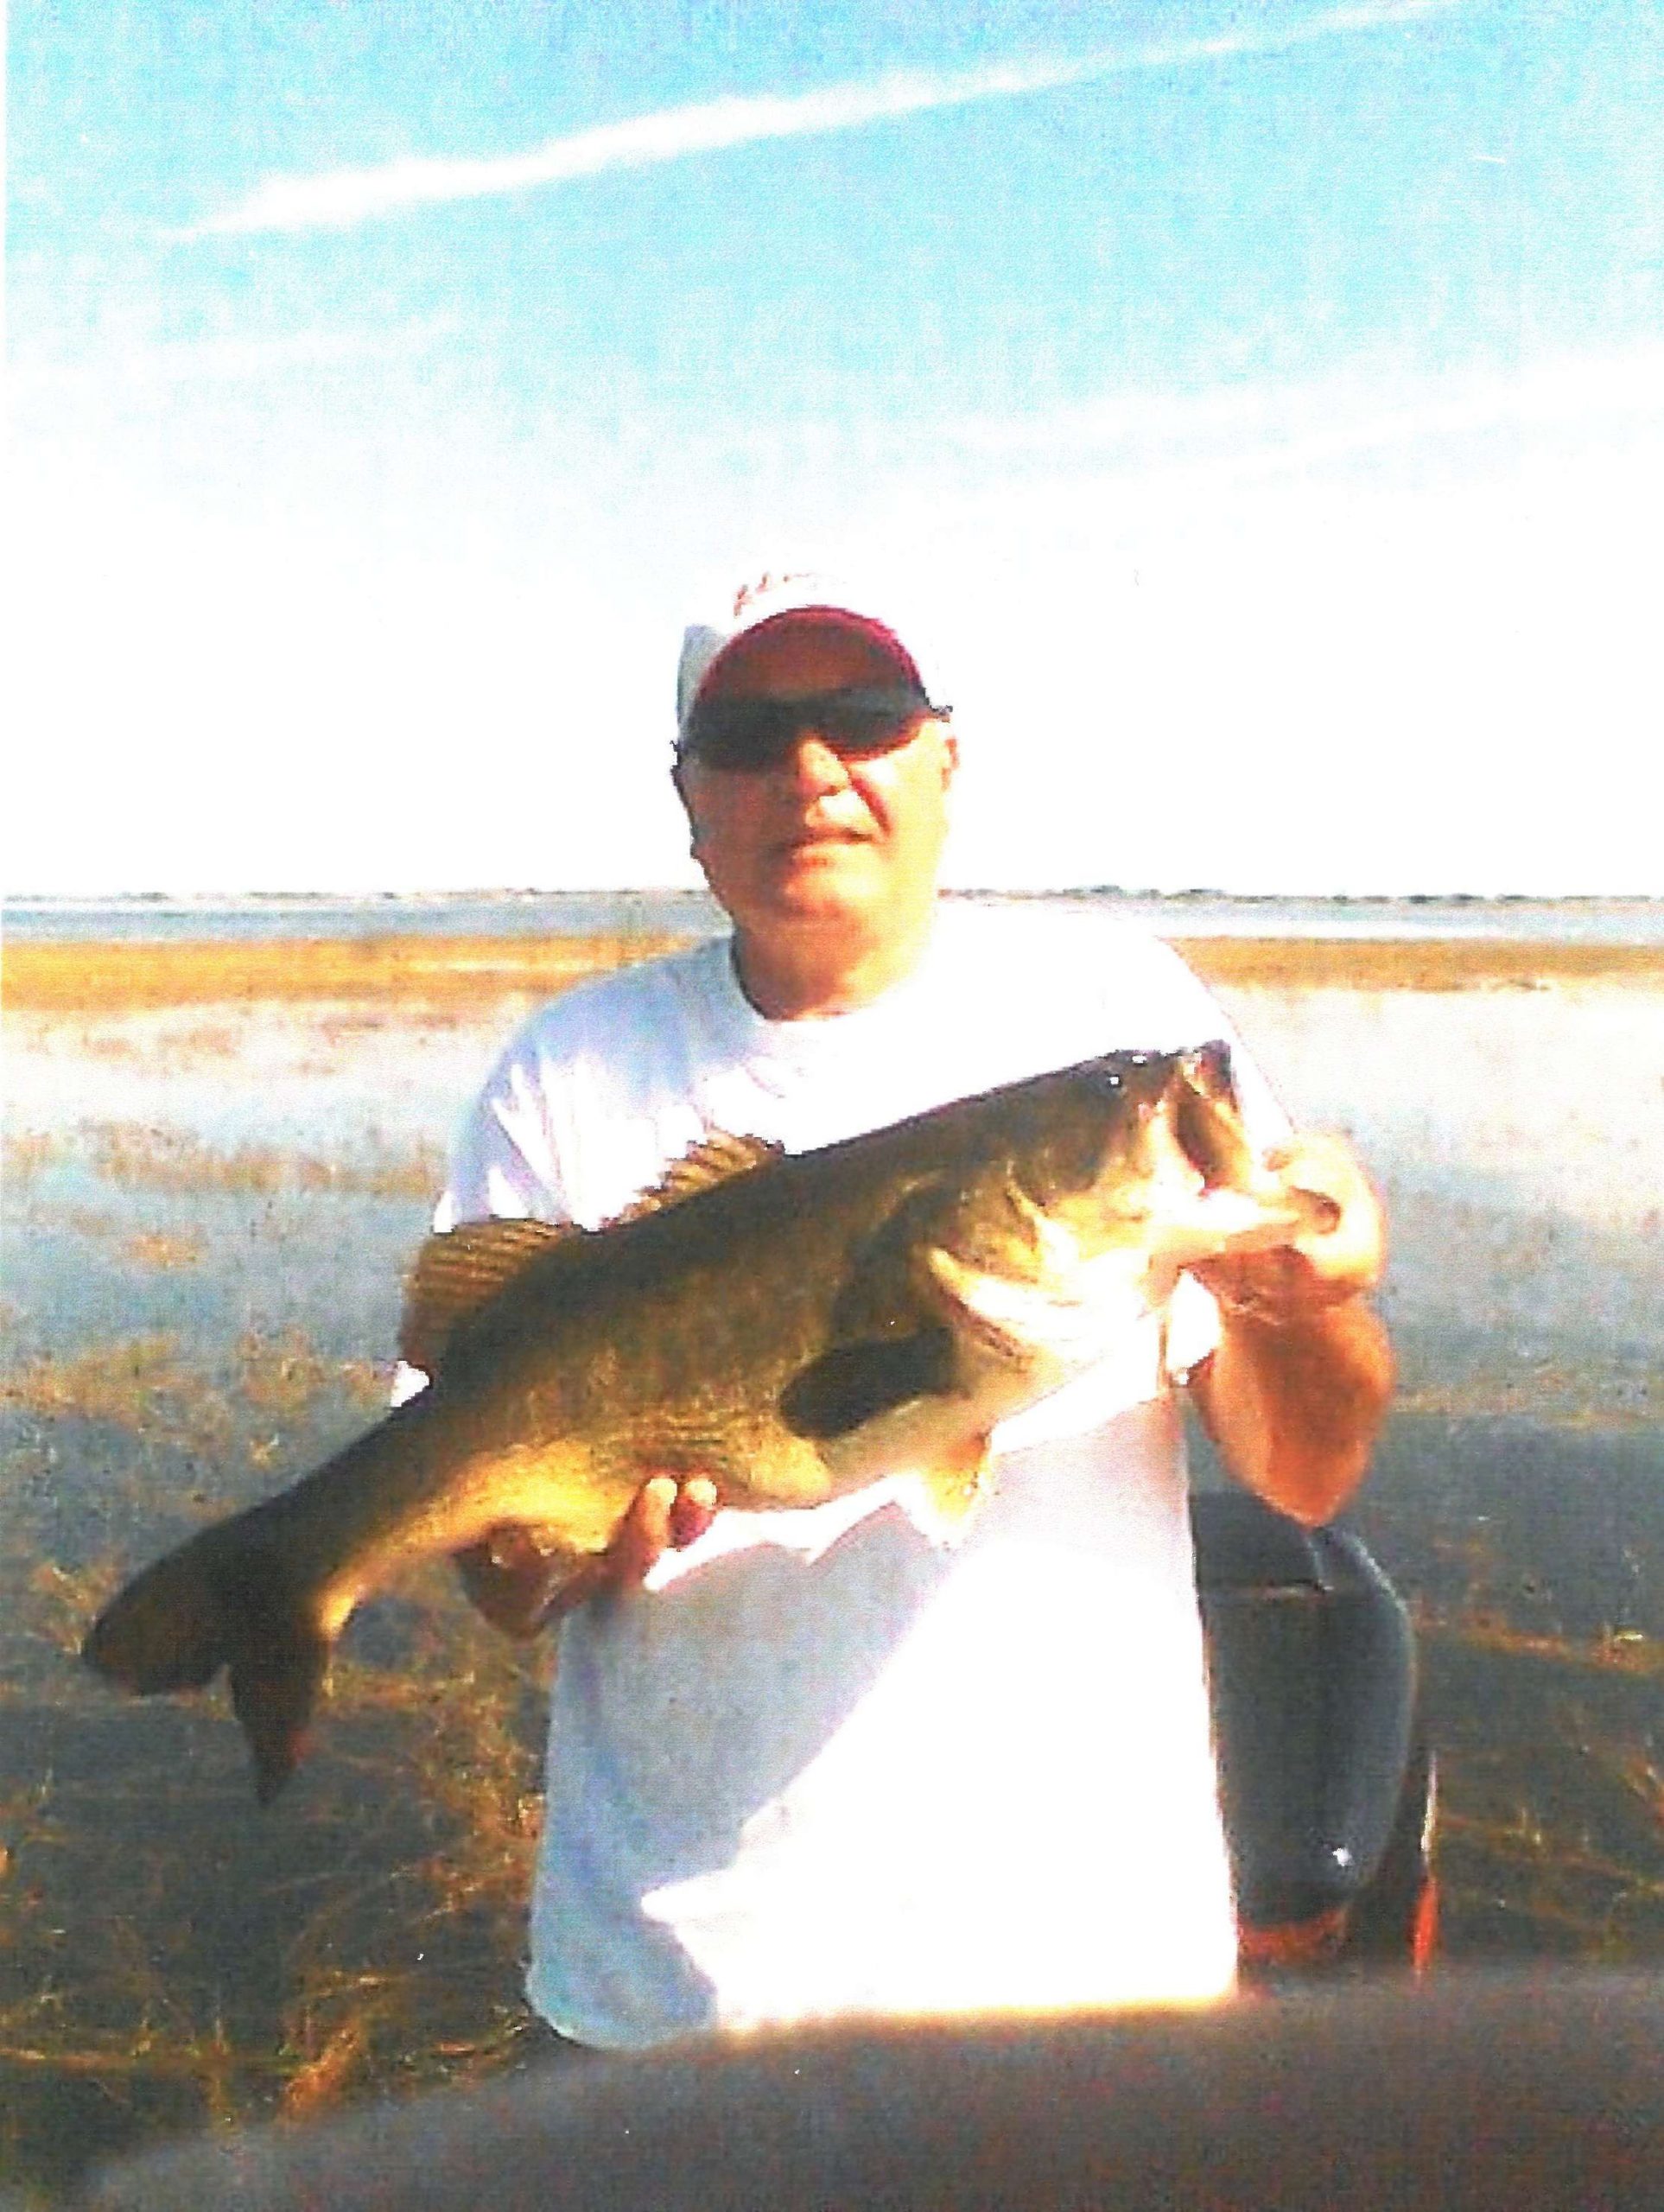 Larry Morehead
Illinois
10-5
Lake Placid, Florida
Zoom Super Fluke (watermelon red)